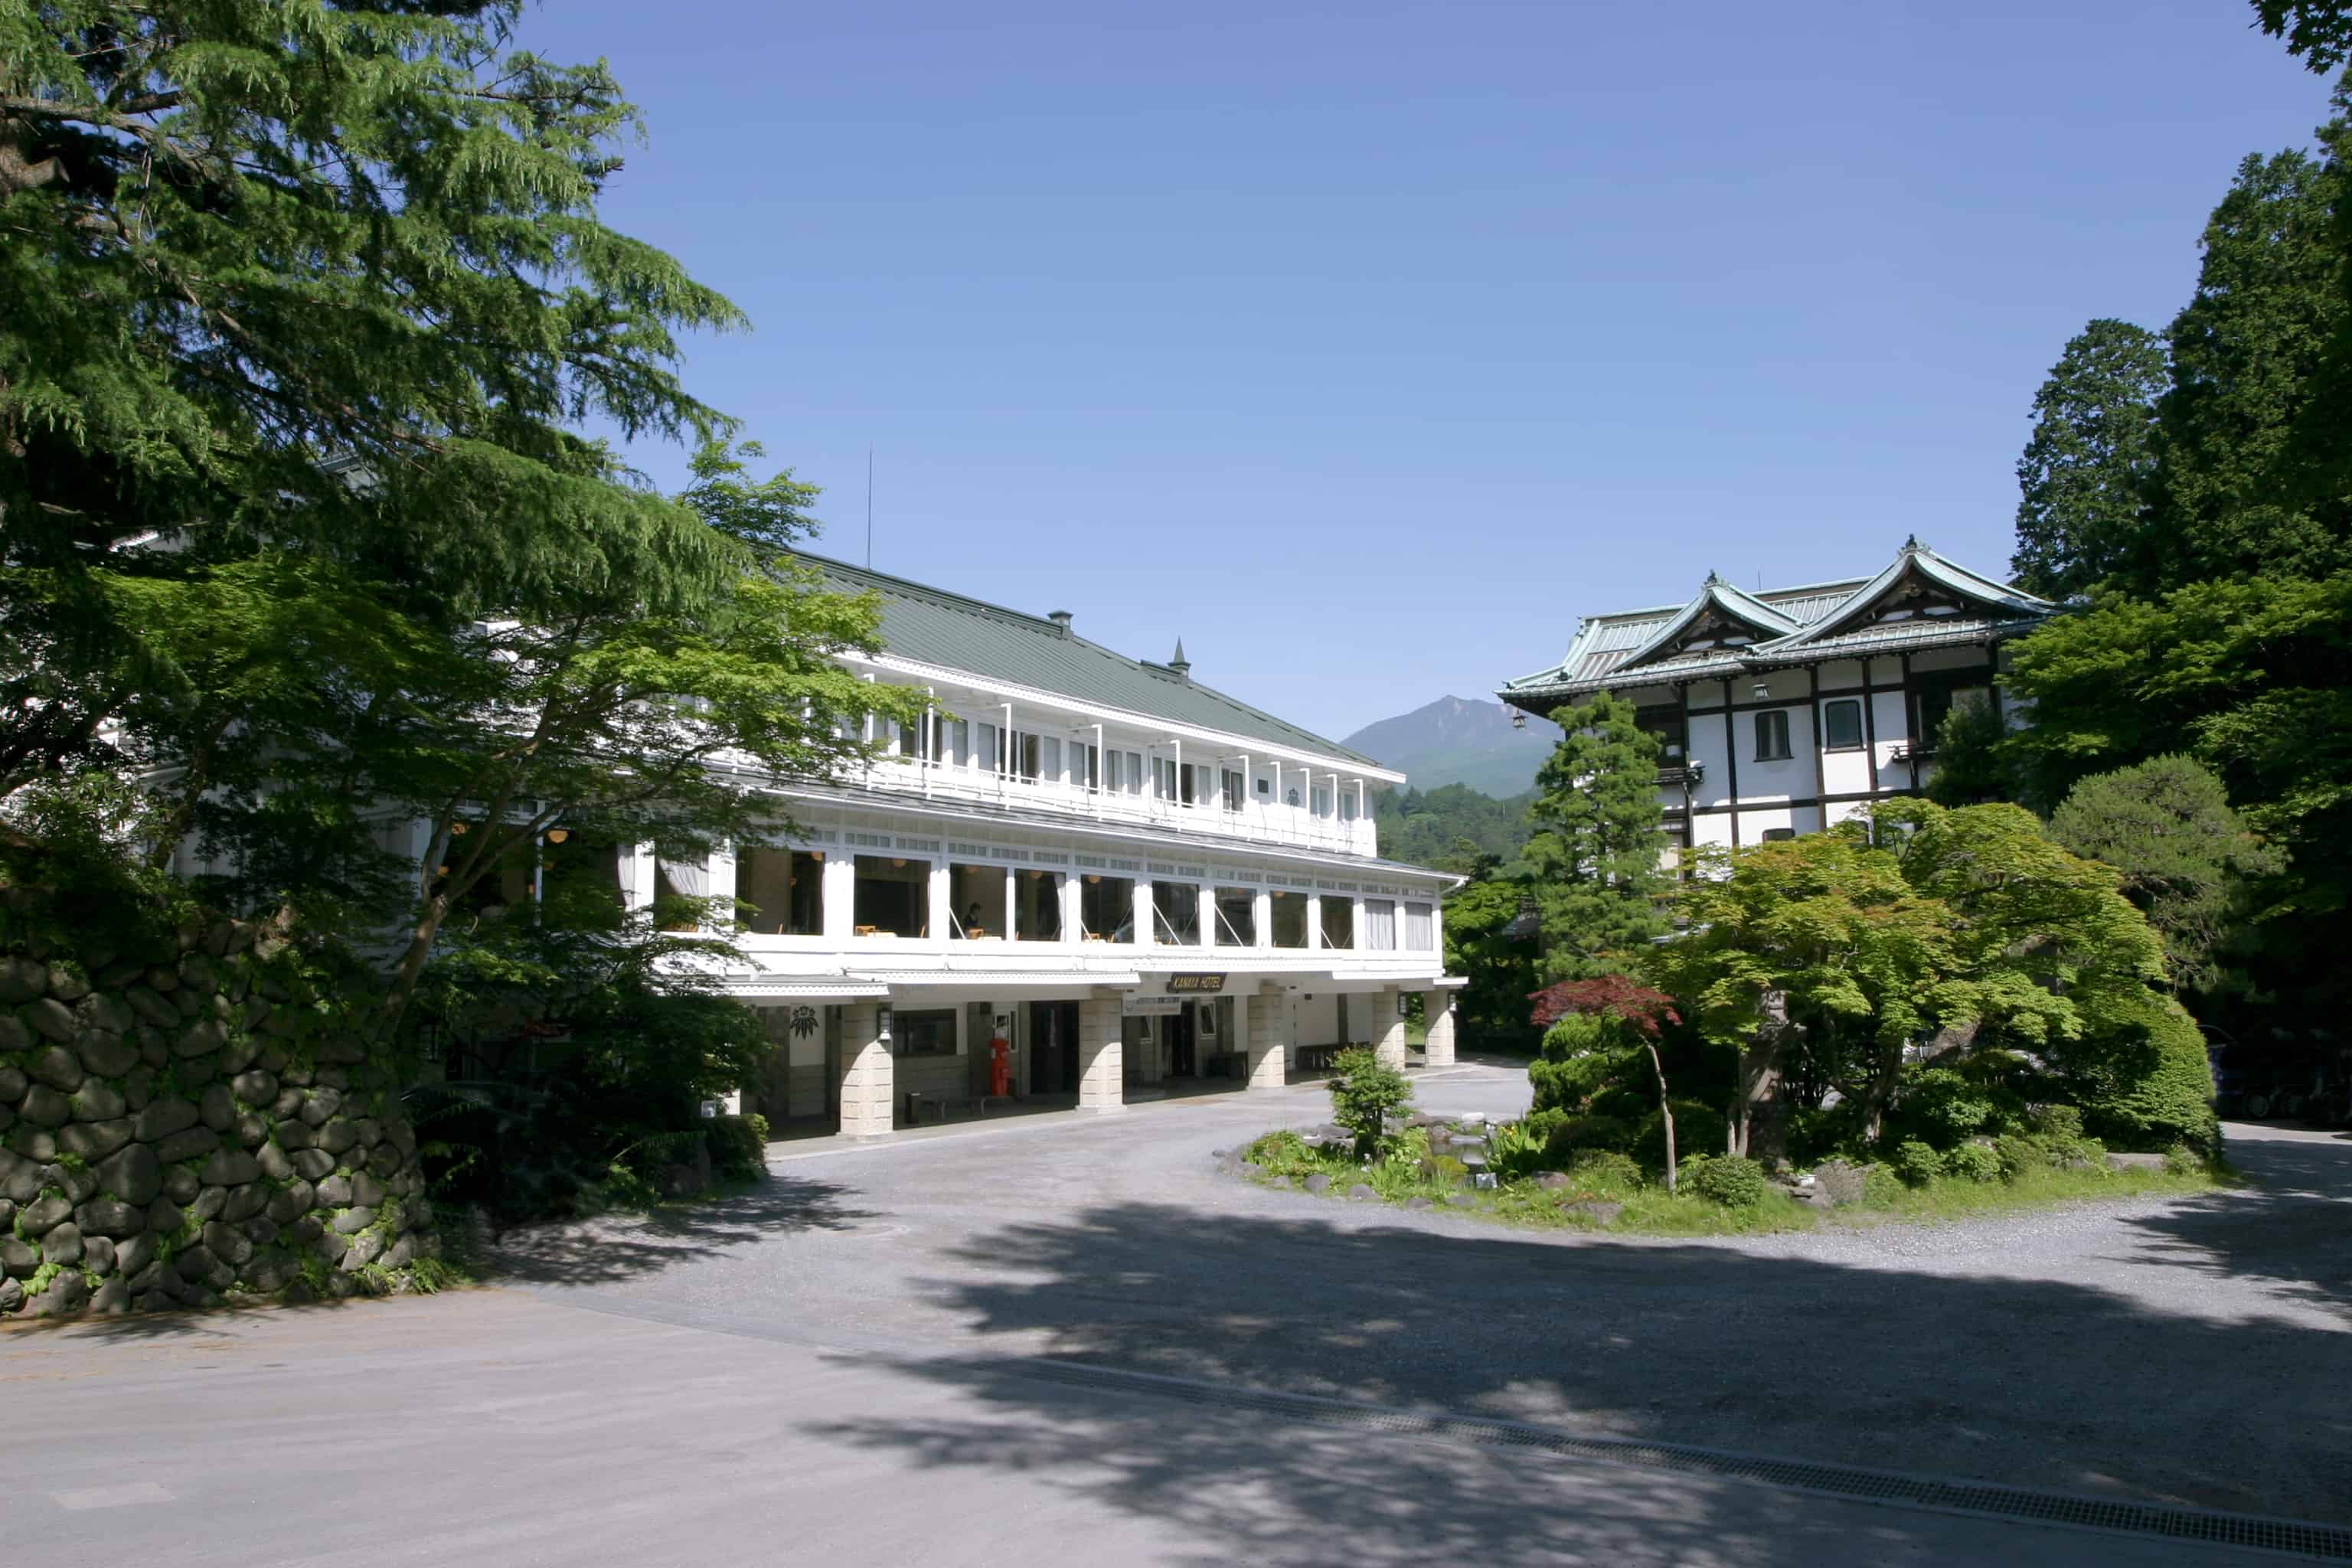 Nikko Kanaya Hotel